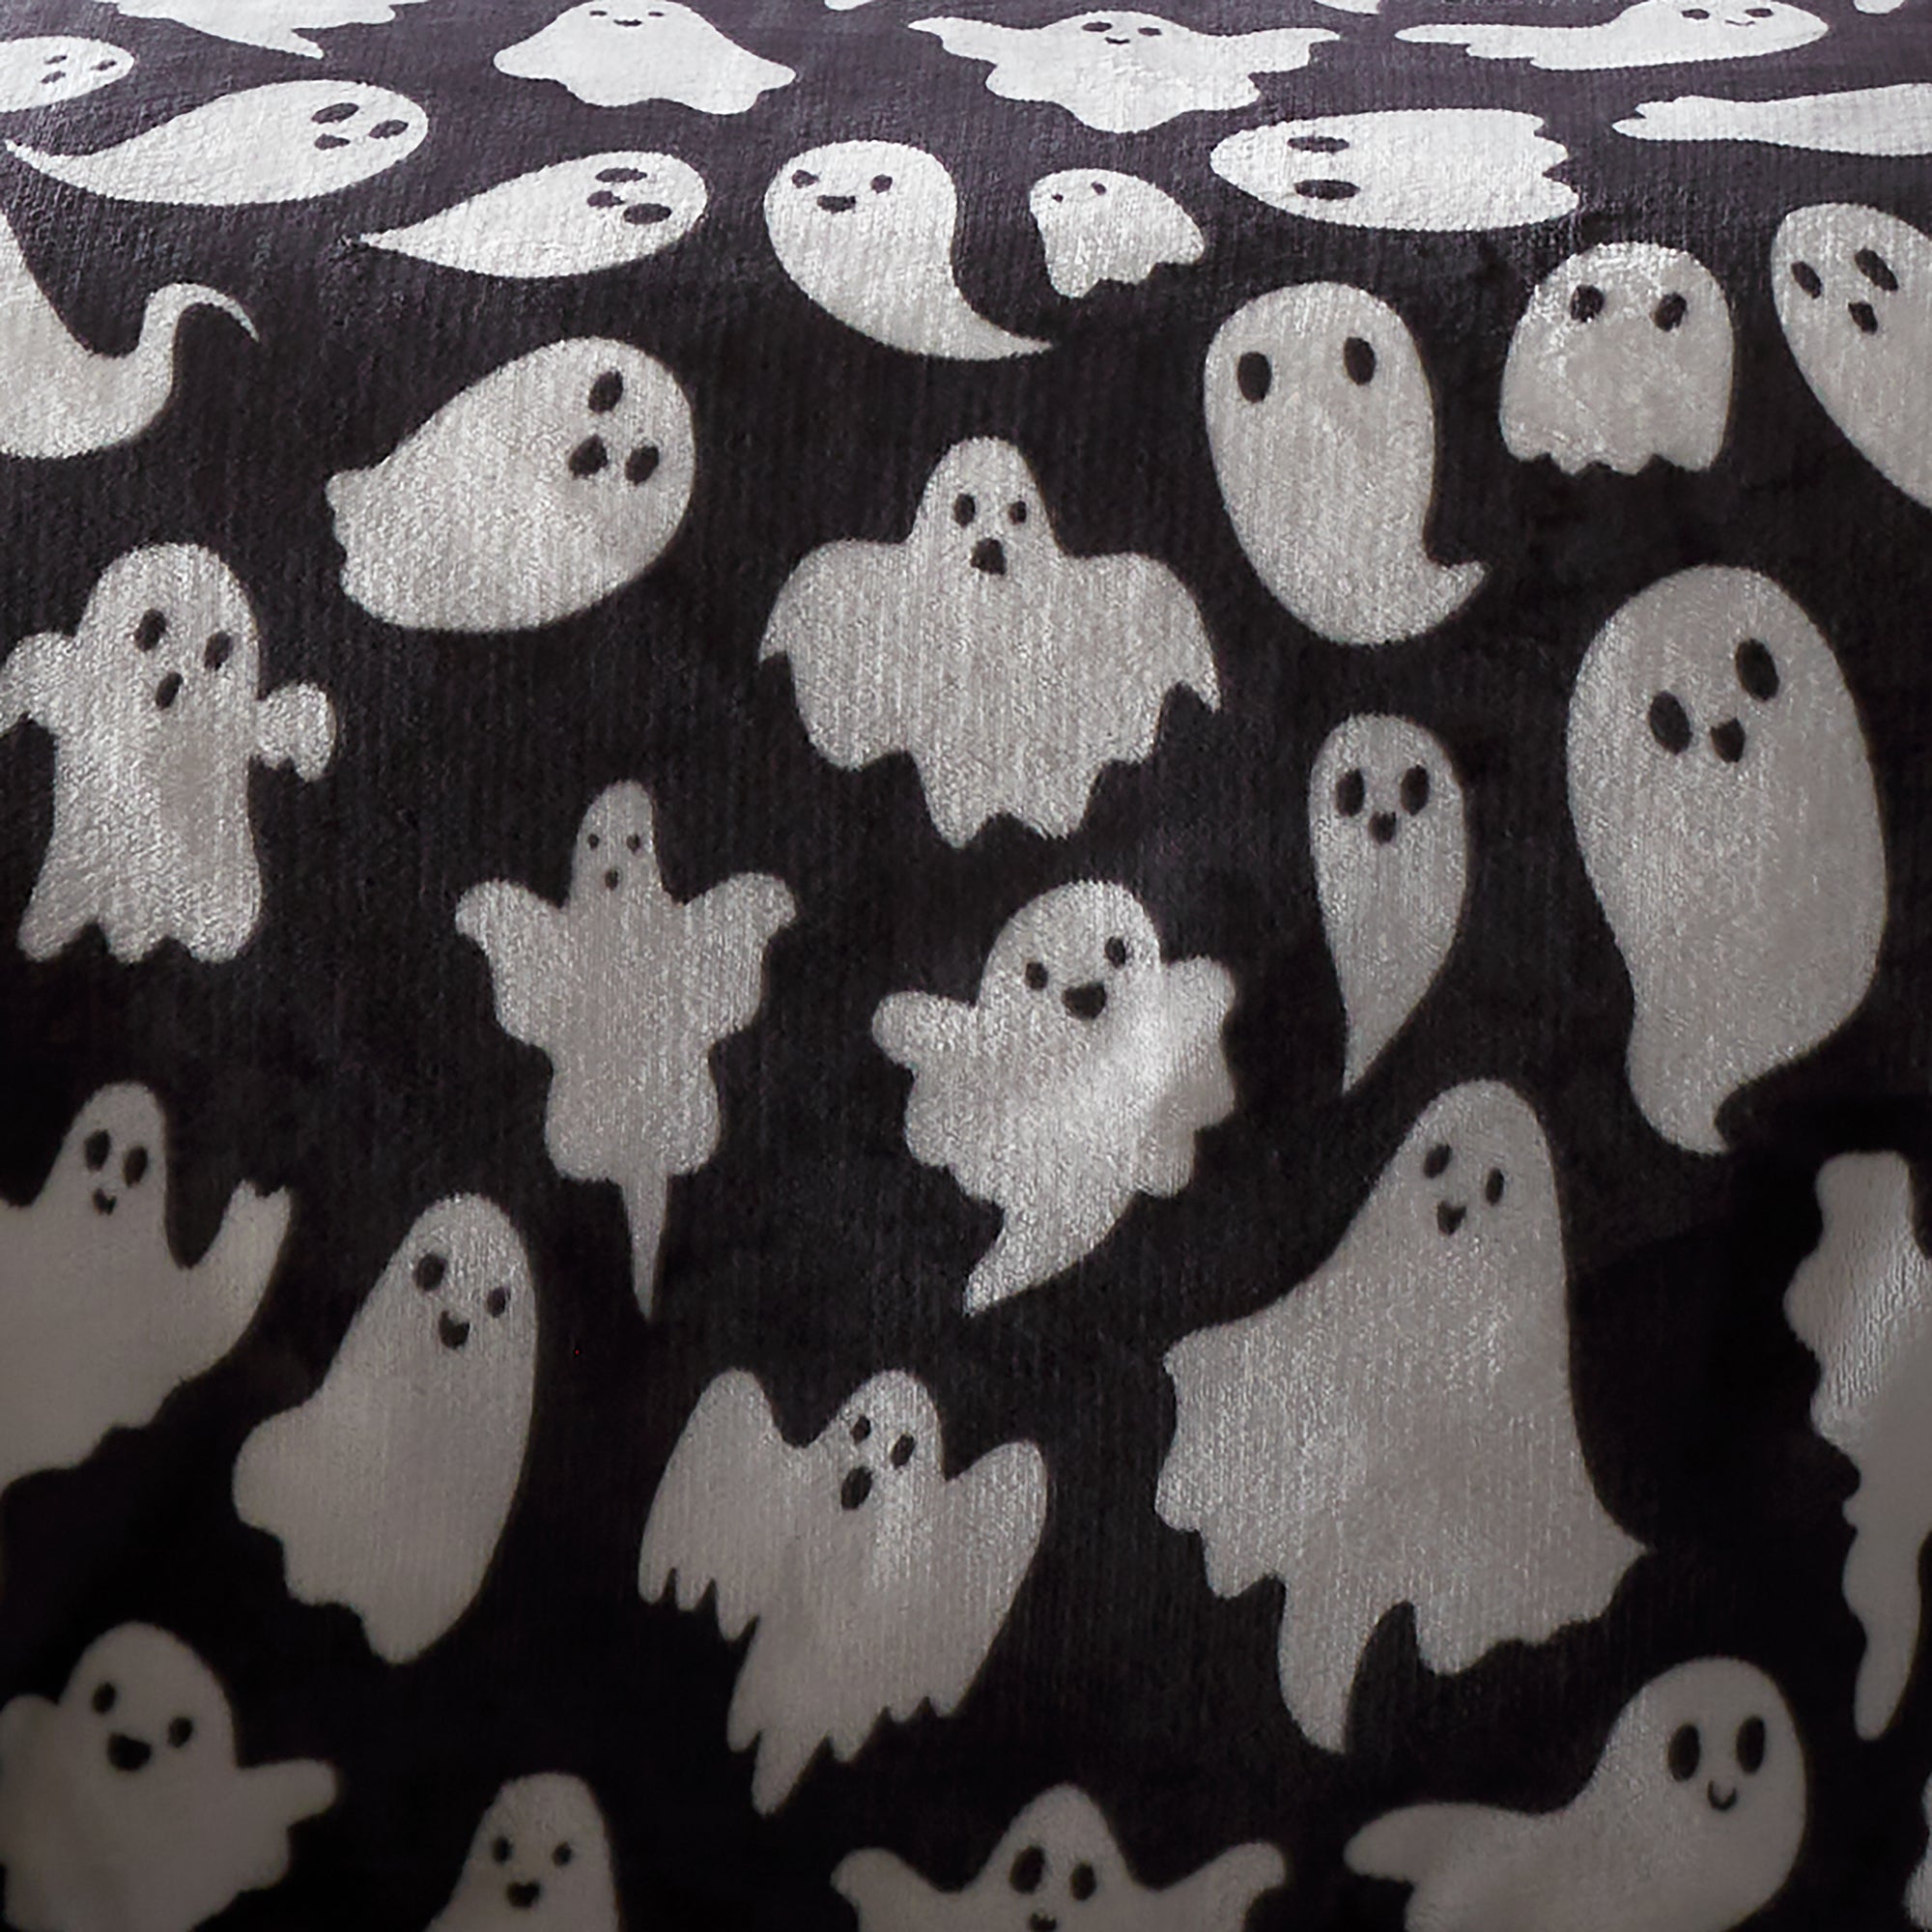 Duvet Cover Set Halloween Spooky Ghosts by Bedlam in Grey